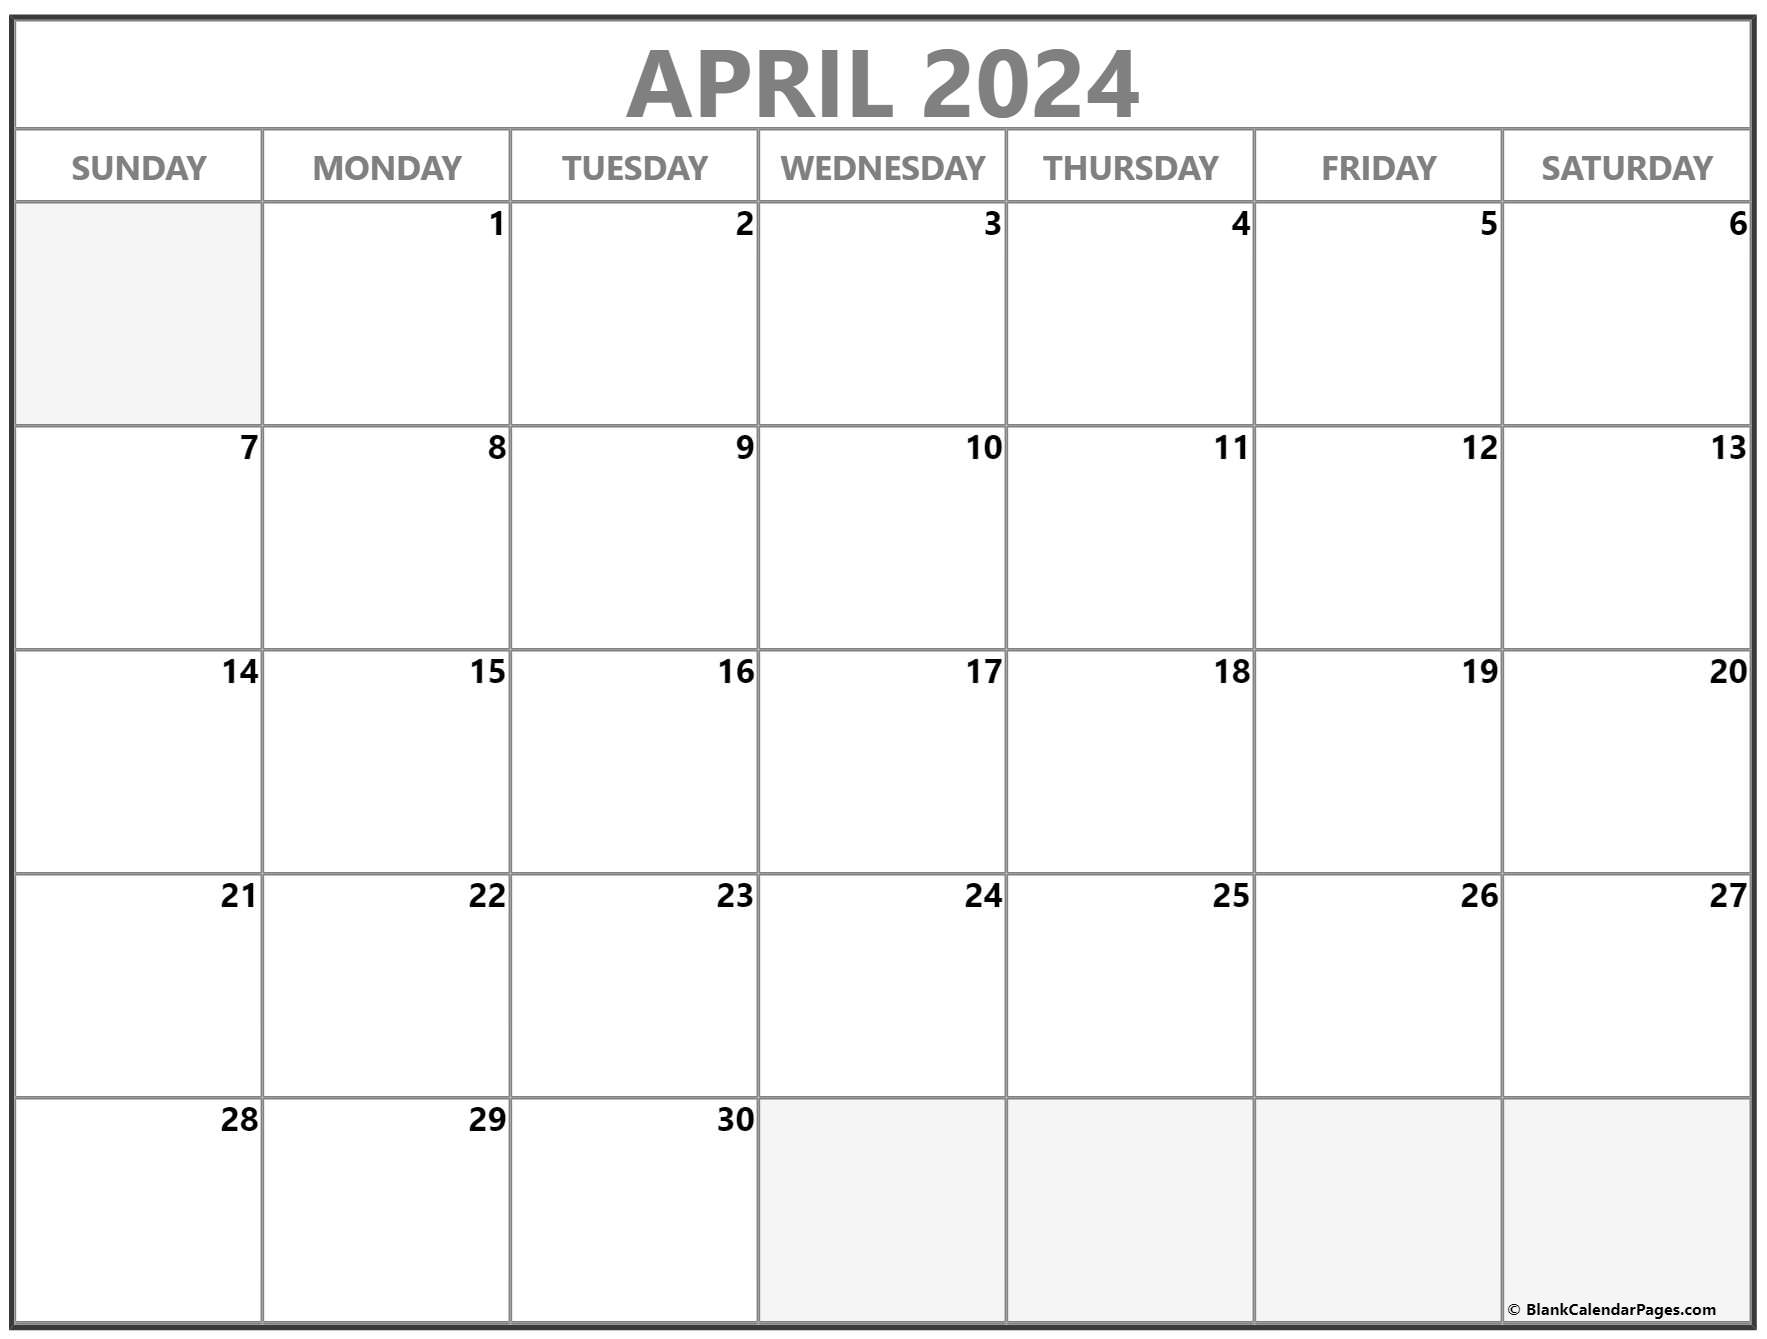 April 2024 Calendar Free Printable Calendar - Free Printable April 2024 Calendar Large Print